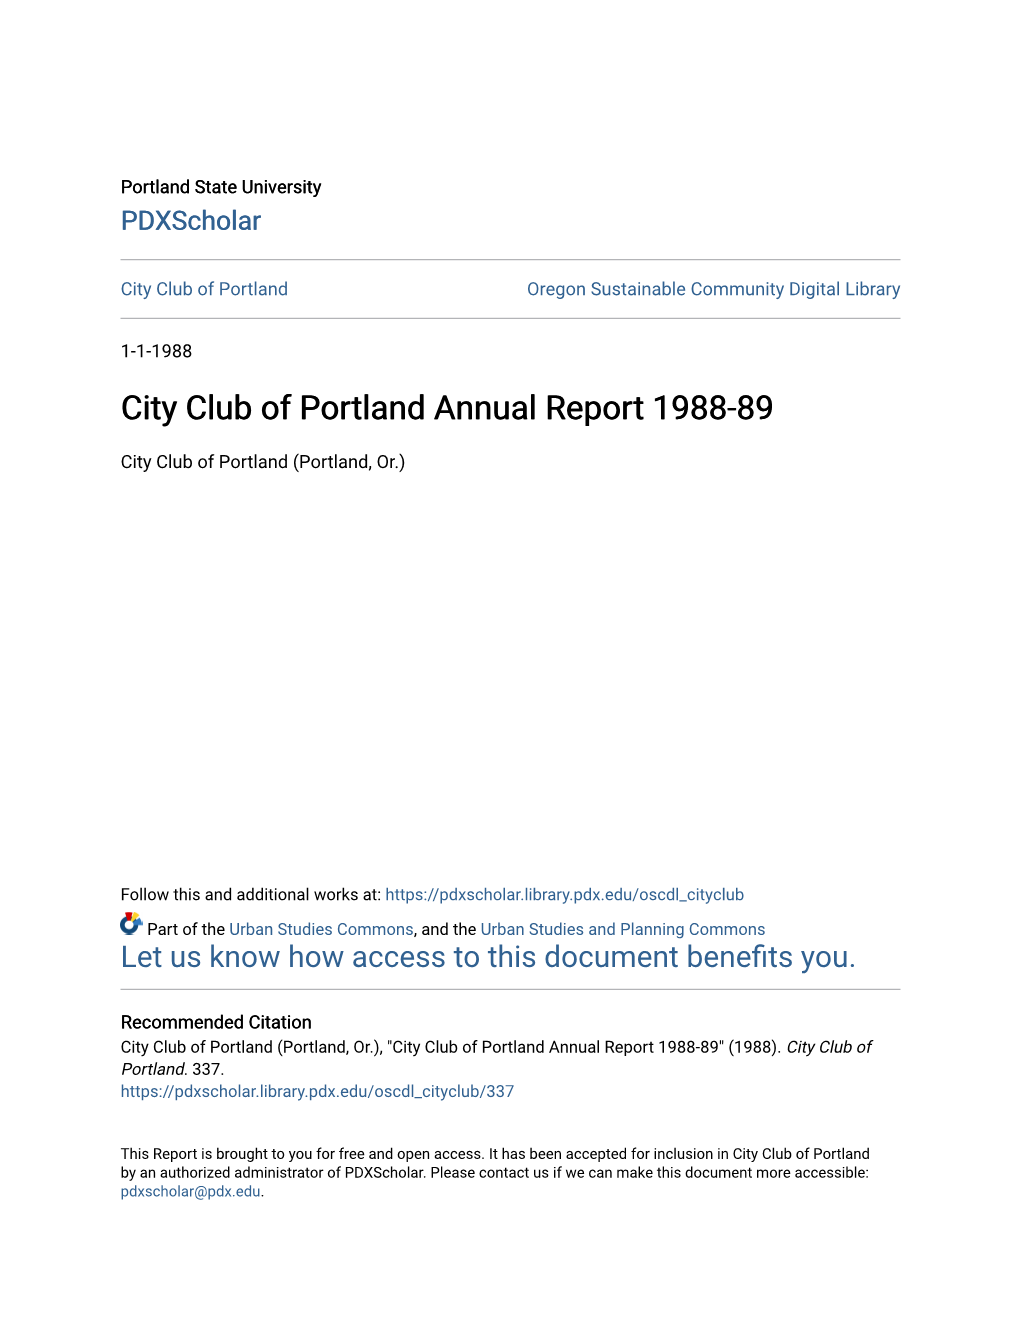 City Club of Portland Annual Report 1988-89